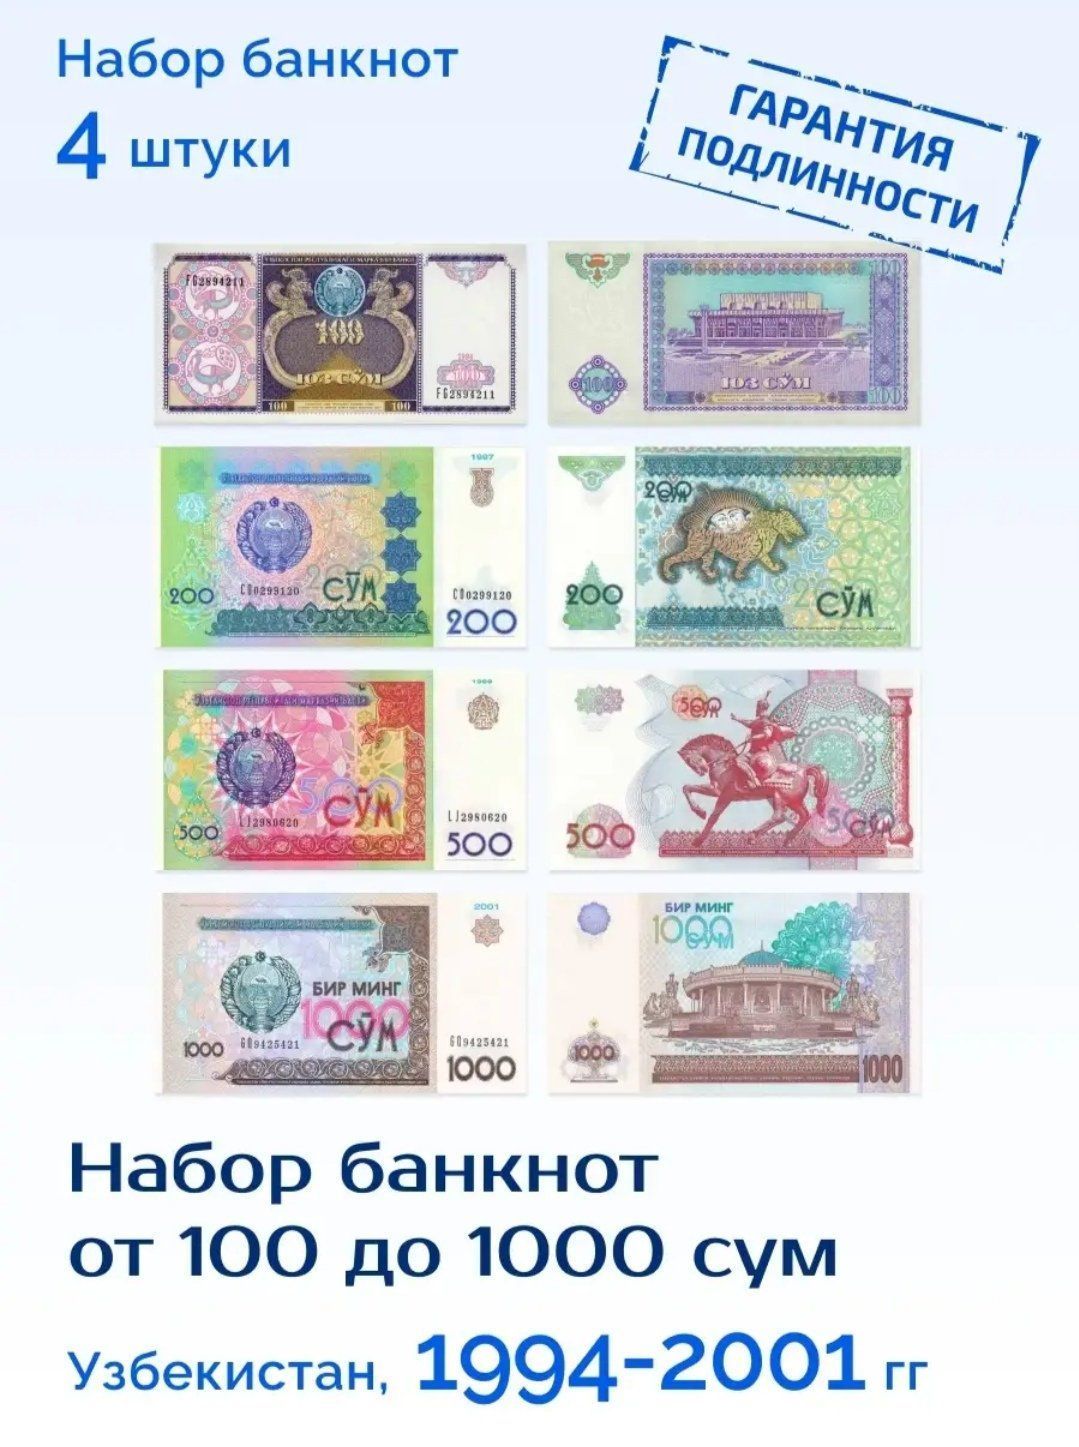 Узбекистан валюта сум. Купюры Узбекистана. Валюта Узбекистана. Национальная валюта Узбекистана. Коллекционные купюры.